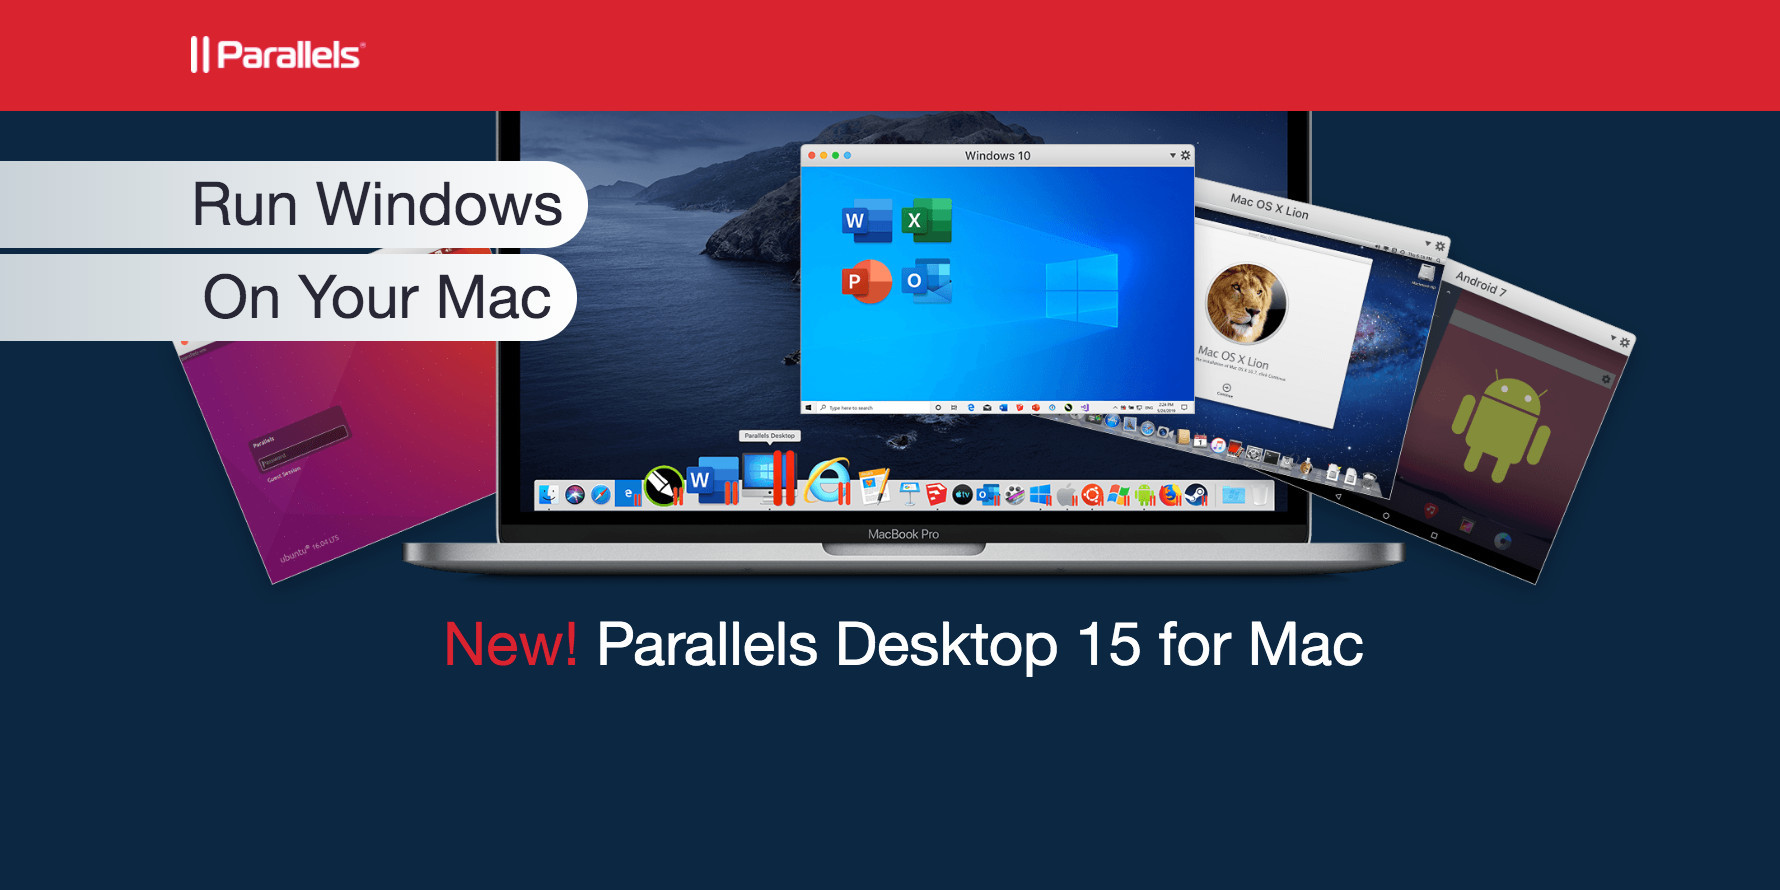 parallels desktop lite vs parallels desktop